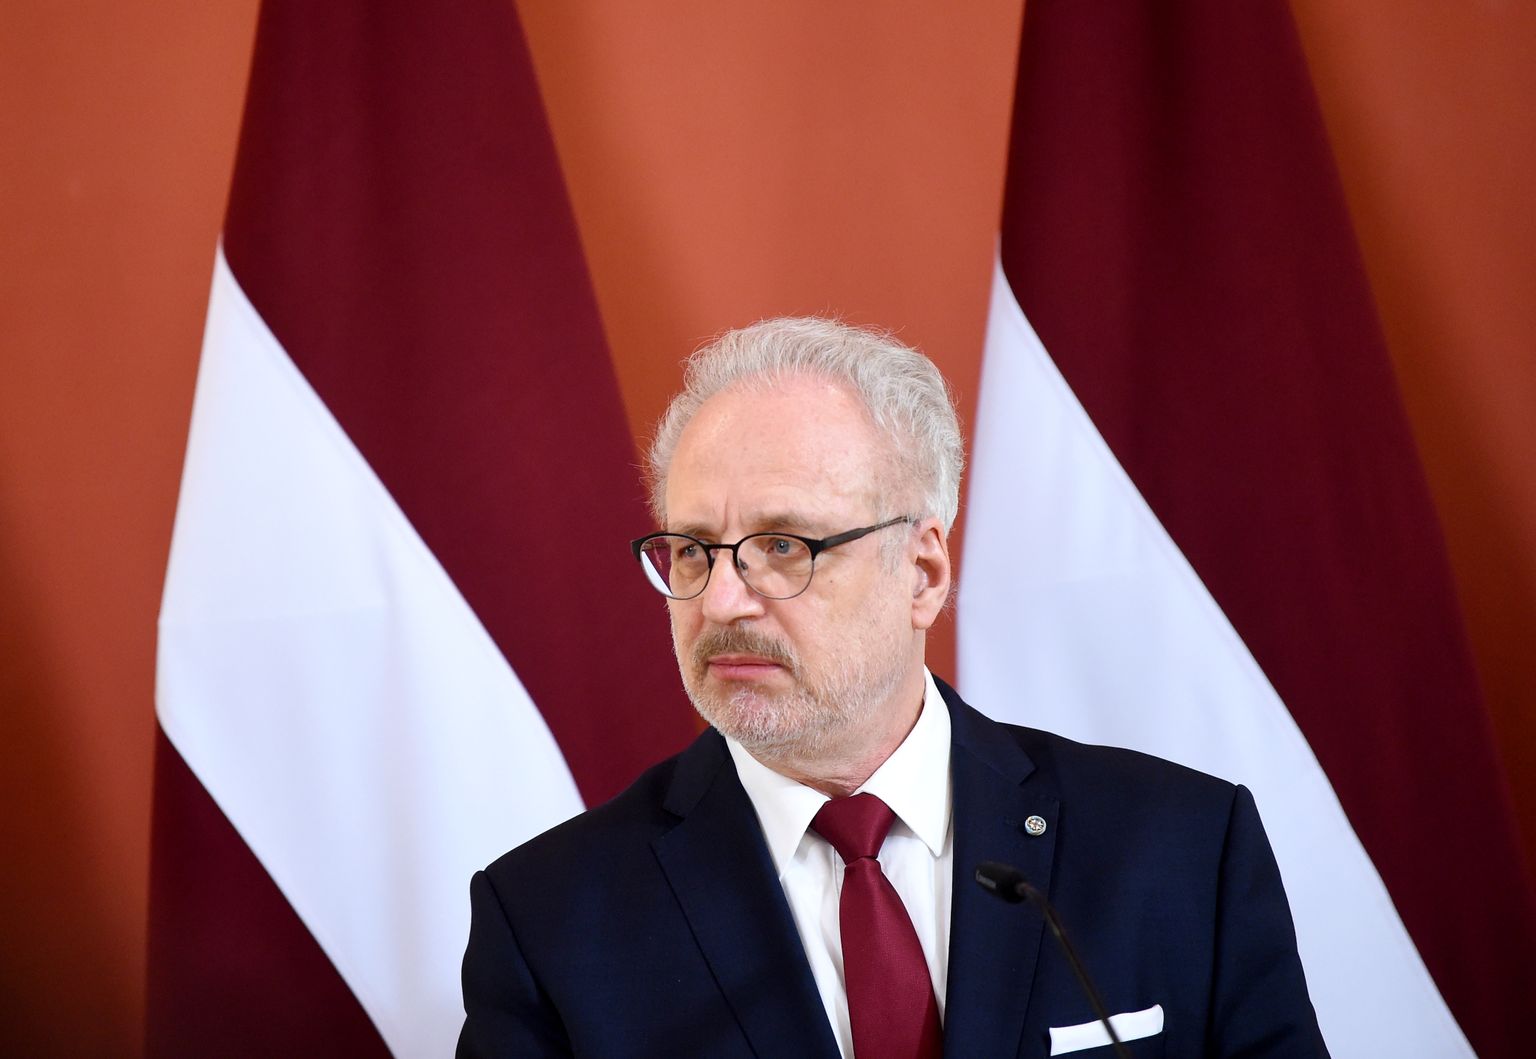 Valsts prezidents Egils Levits saka uzrunu Latvijas valsts